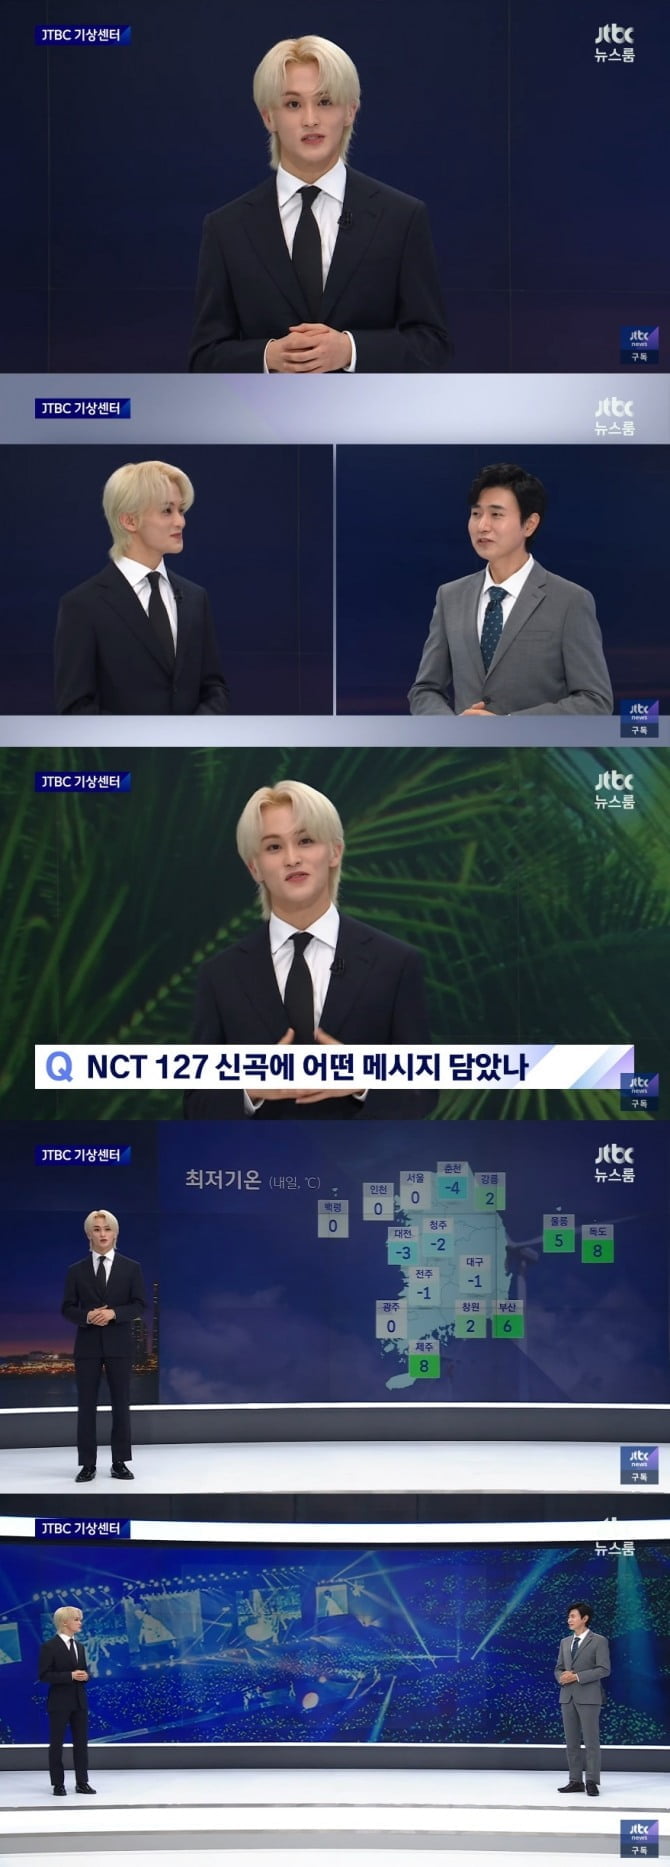 NCT 마크, JTBC ‘뉴스룸’ 출연 화제…“좋은 곡을 더 많이 만들어서 긍정적인 메시지를 전하고 싶다”